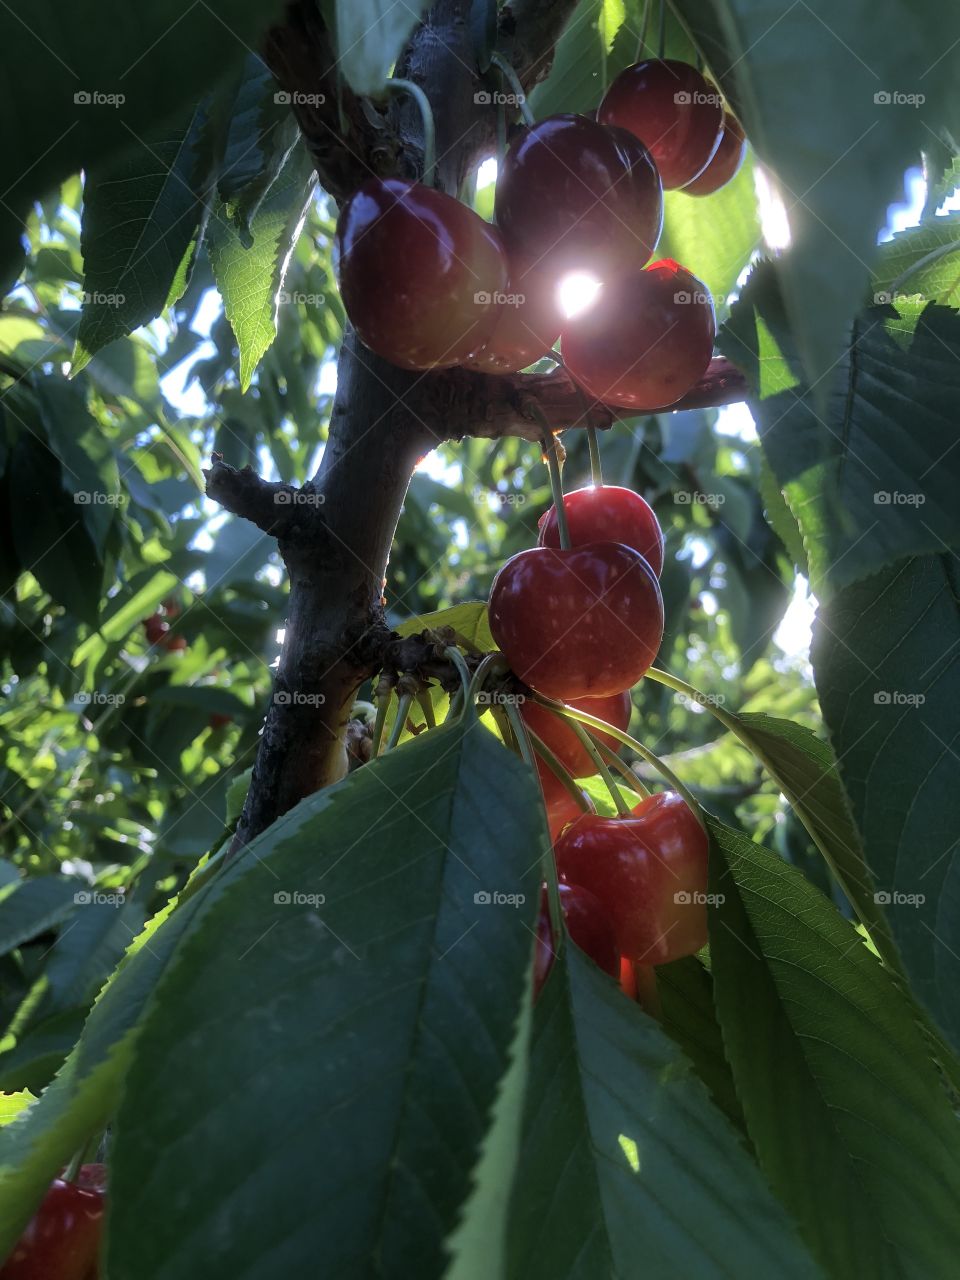 Rainier Cherries on the tree, Kennewick, Tri-Cities, WA